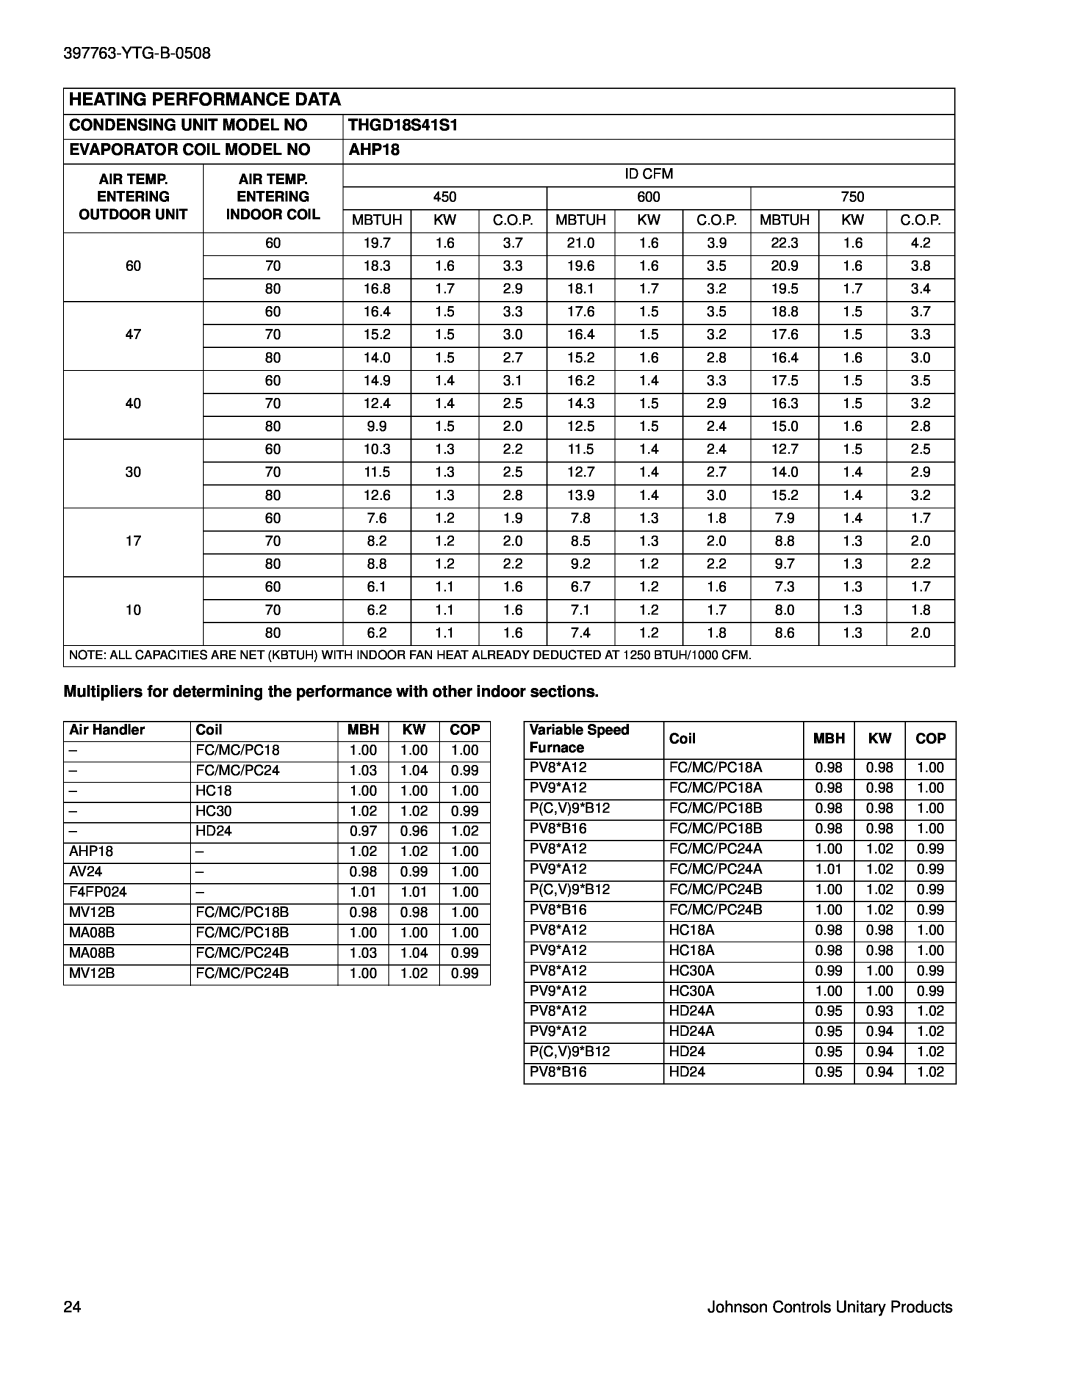 York THGD18 THRU 60 Heating Performance Data, Evaporator Coil Model No, Condensing Unit Model No, THGD18S41S1, AHP18 